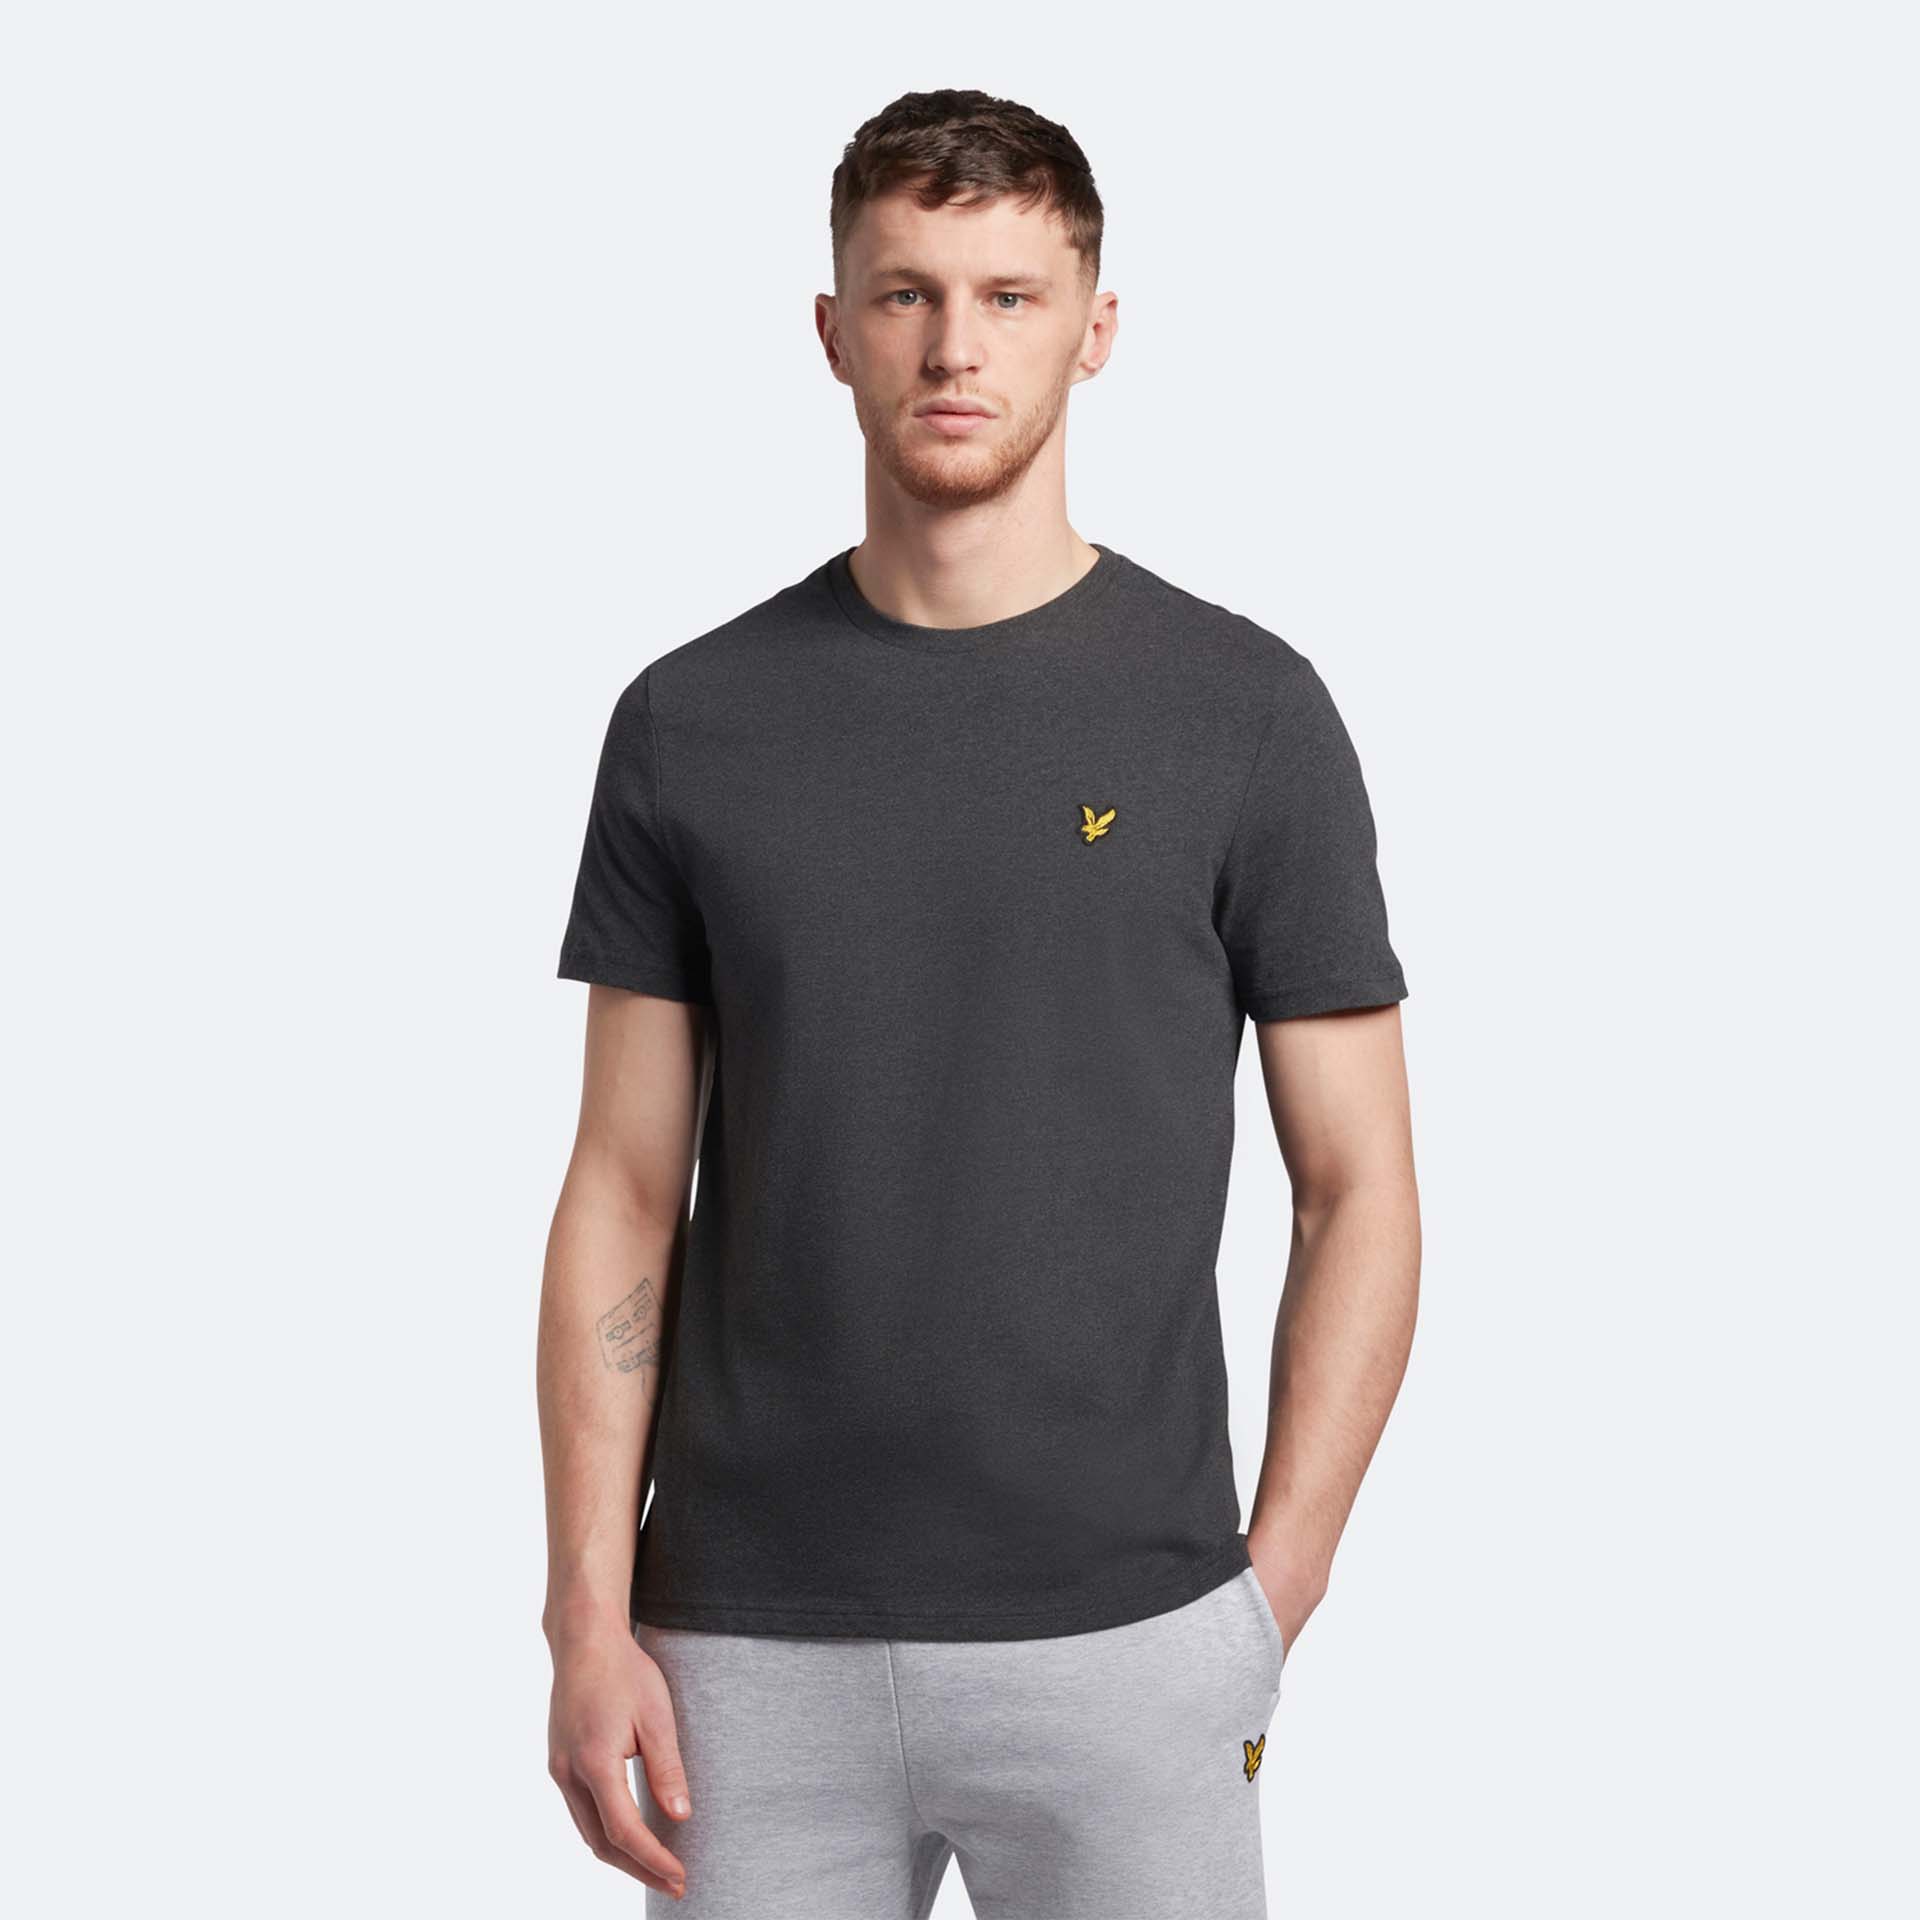 Lyle & Scott Plain T-Shirt Charcoal Marl